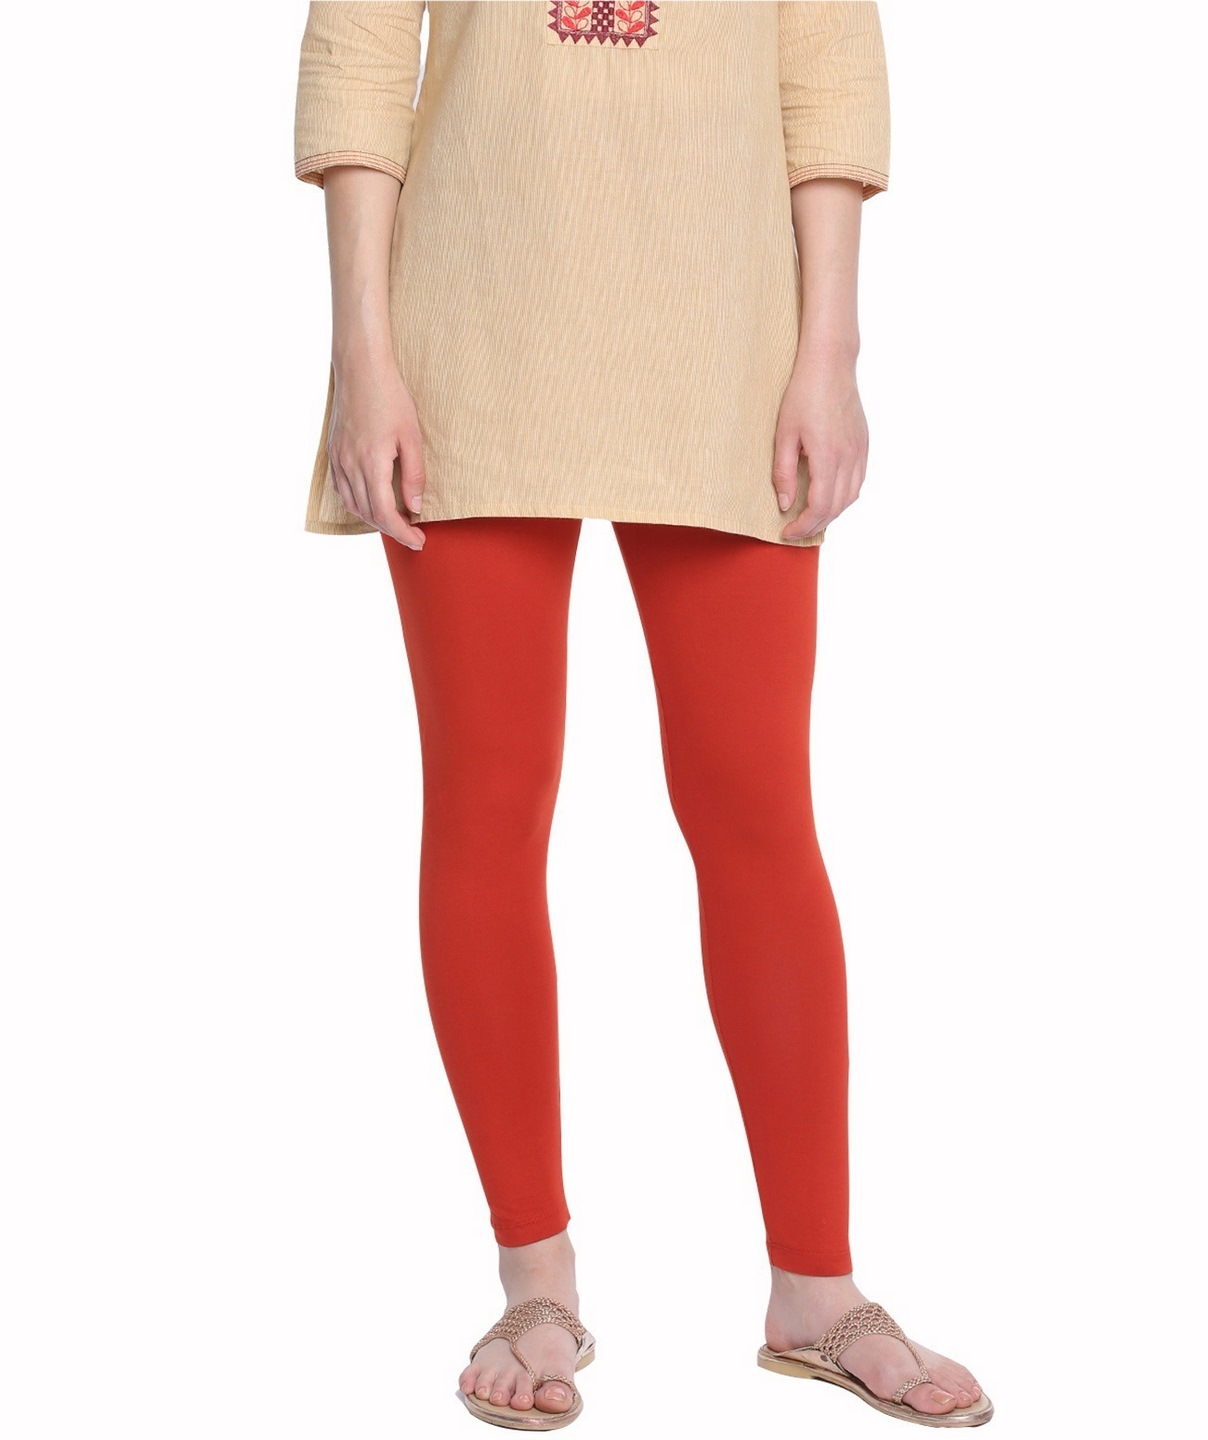 Buy Red Leggings for Women by DOLLAR MISSY Online | Ajio.com